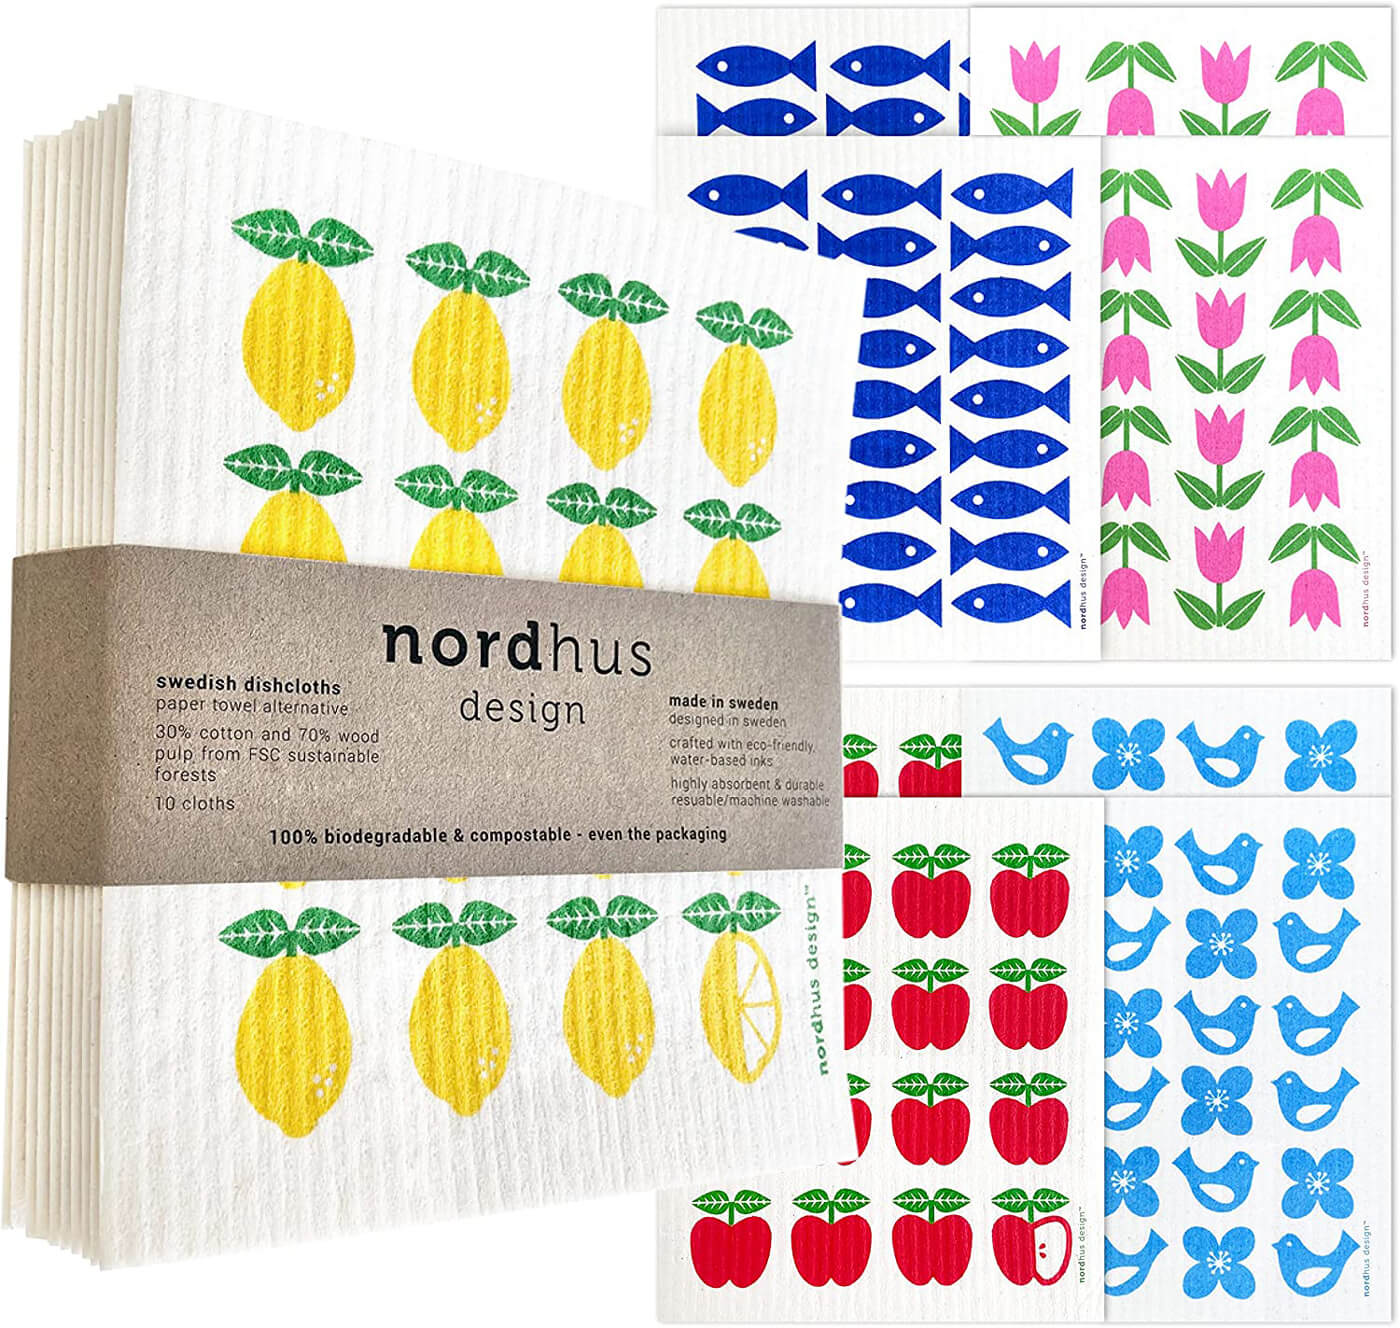 Nordhus Design Swedish Dishcloths,10 Grey Cloths, Made in Sweden